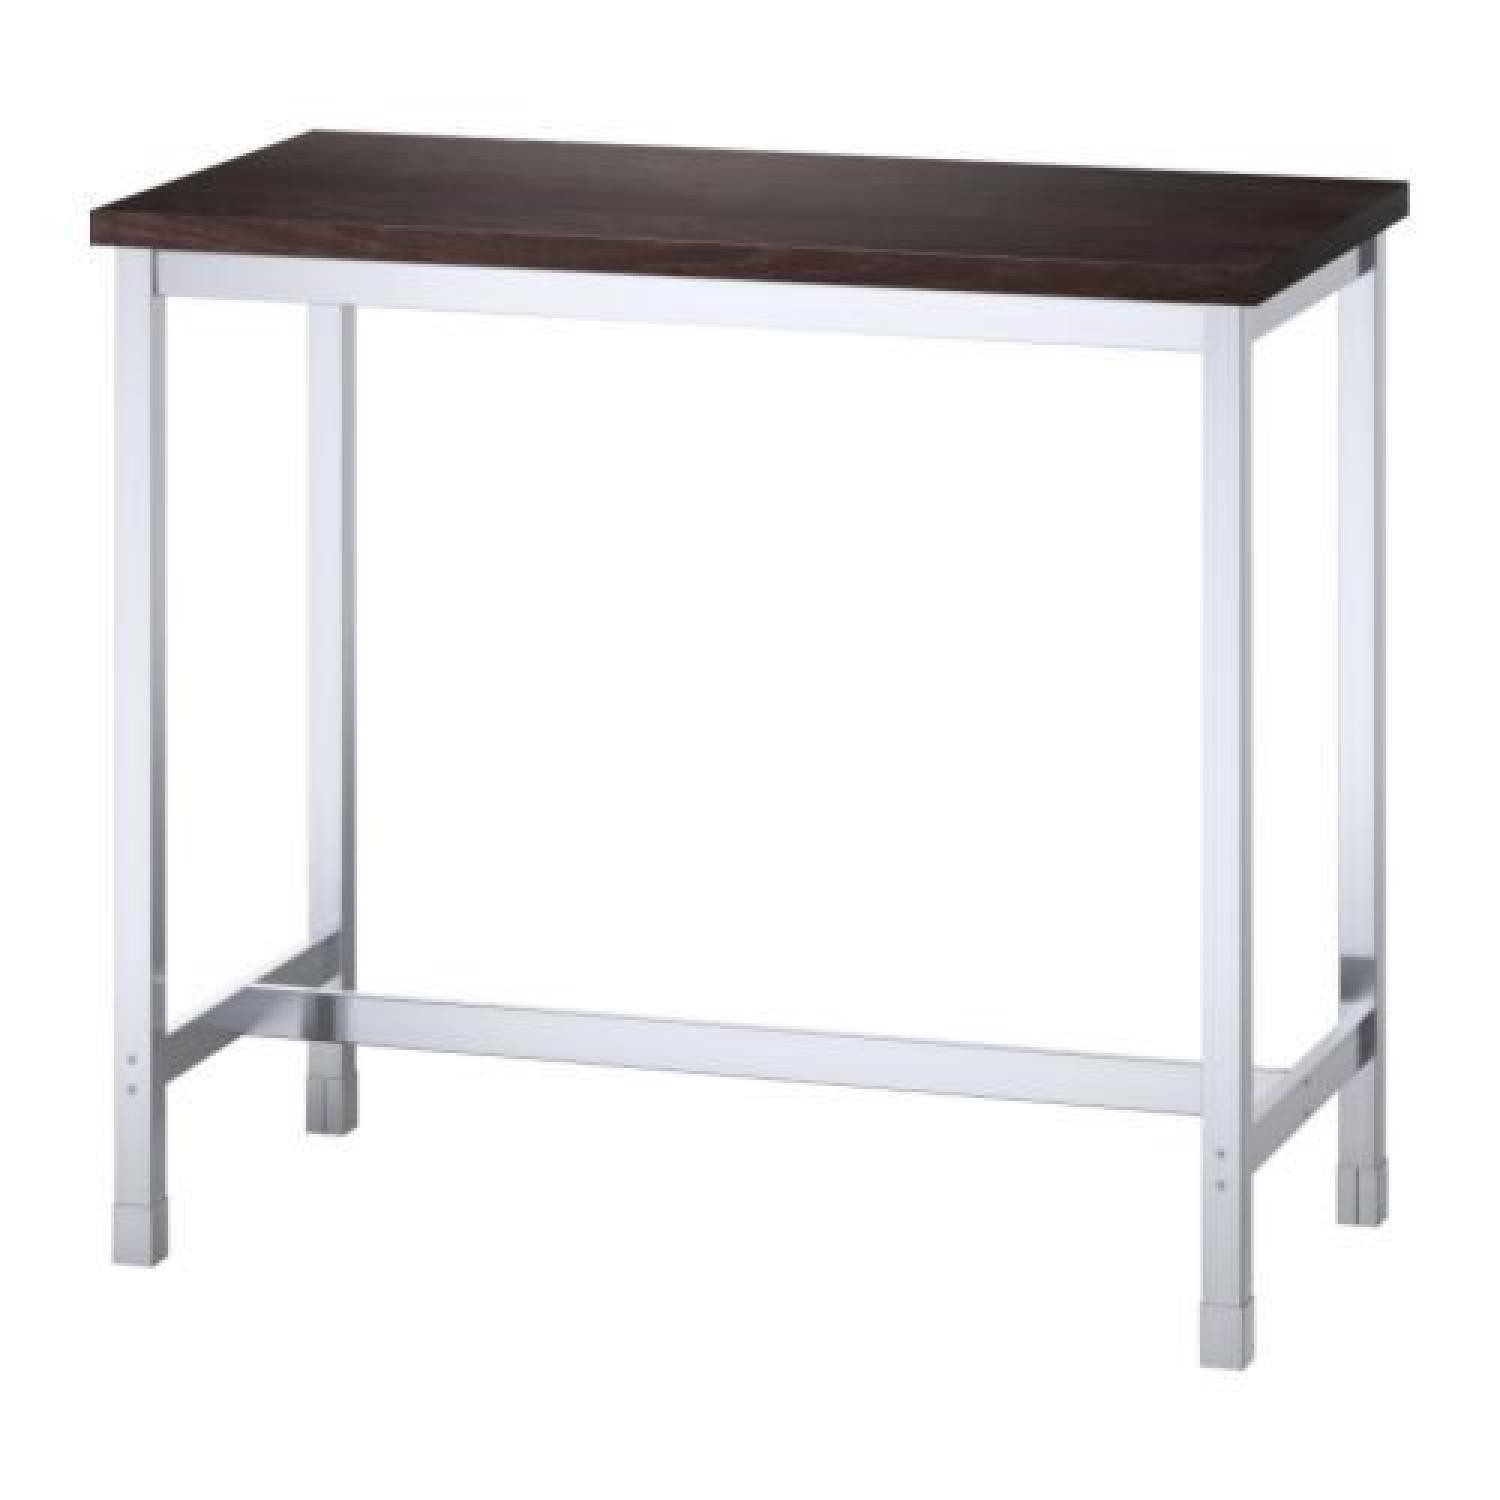 Black bar height table